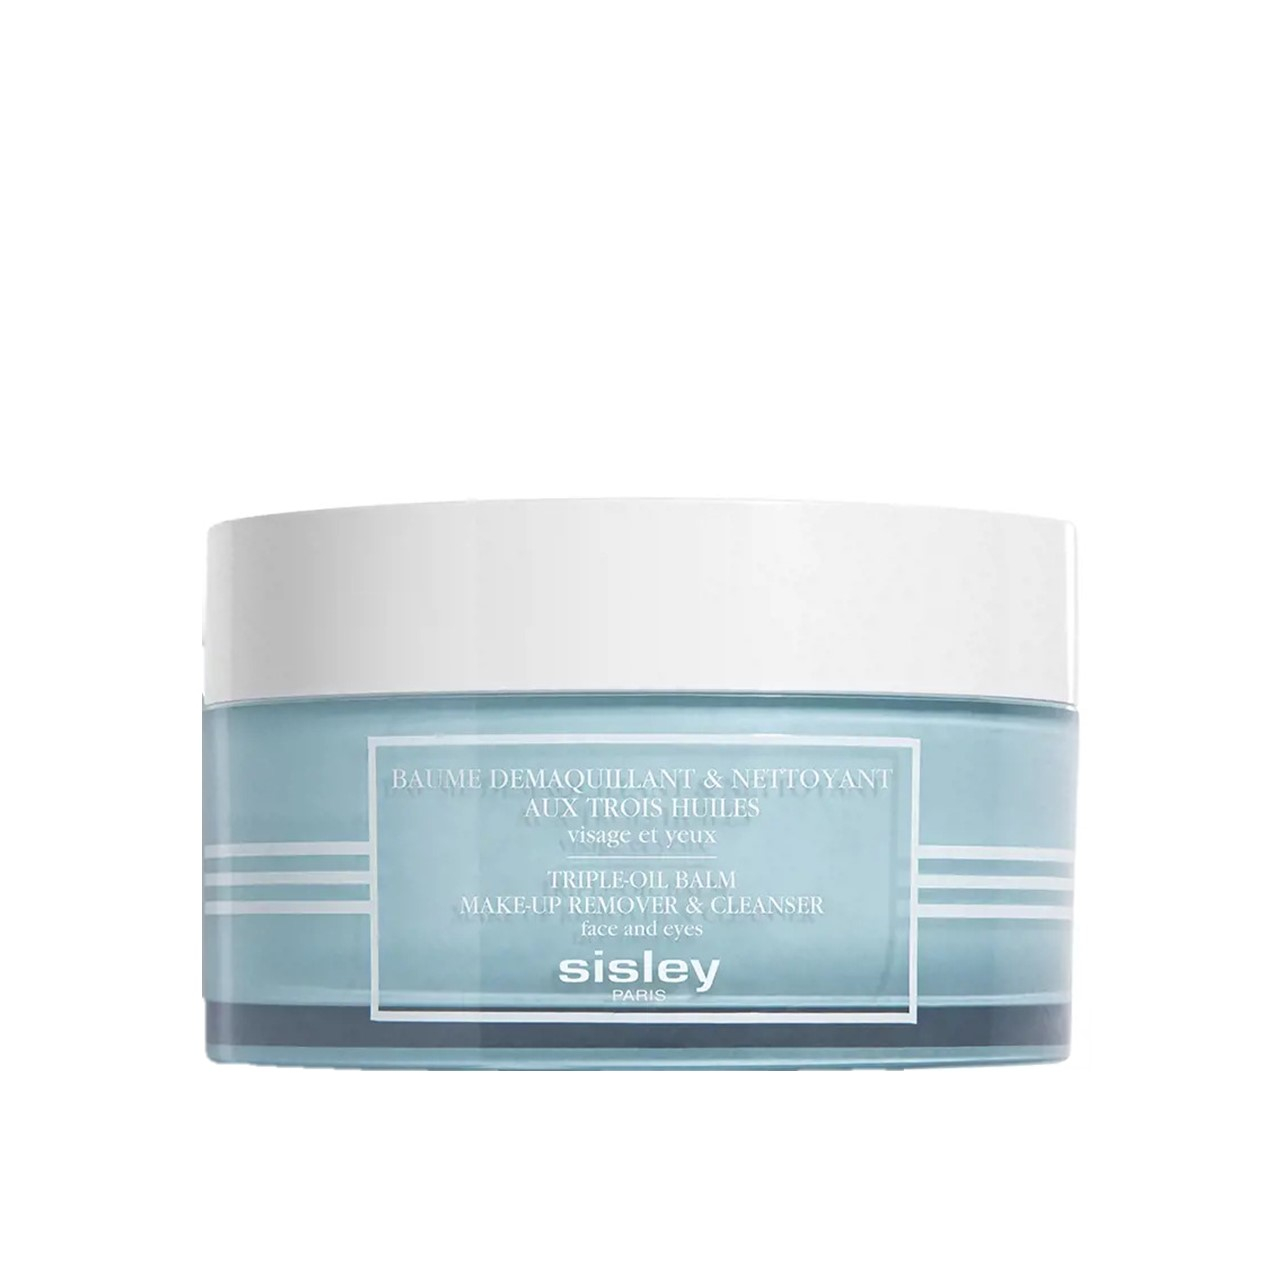 Sisley Paris Triple-Oil Balm Make-Up Remover & Cleanser 125g